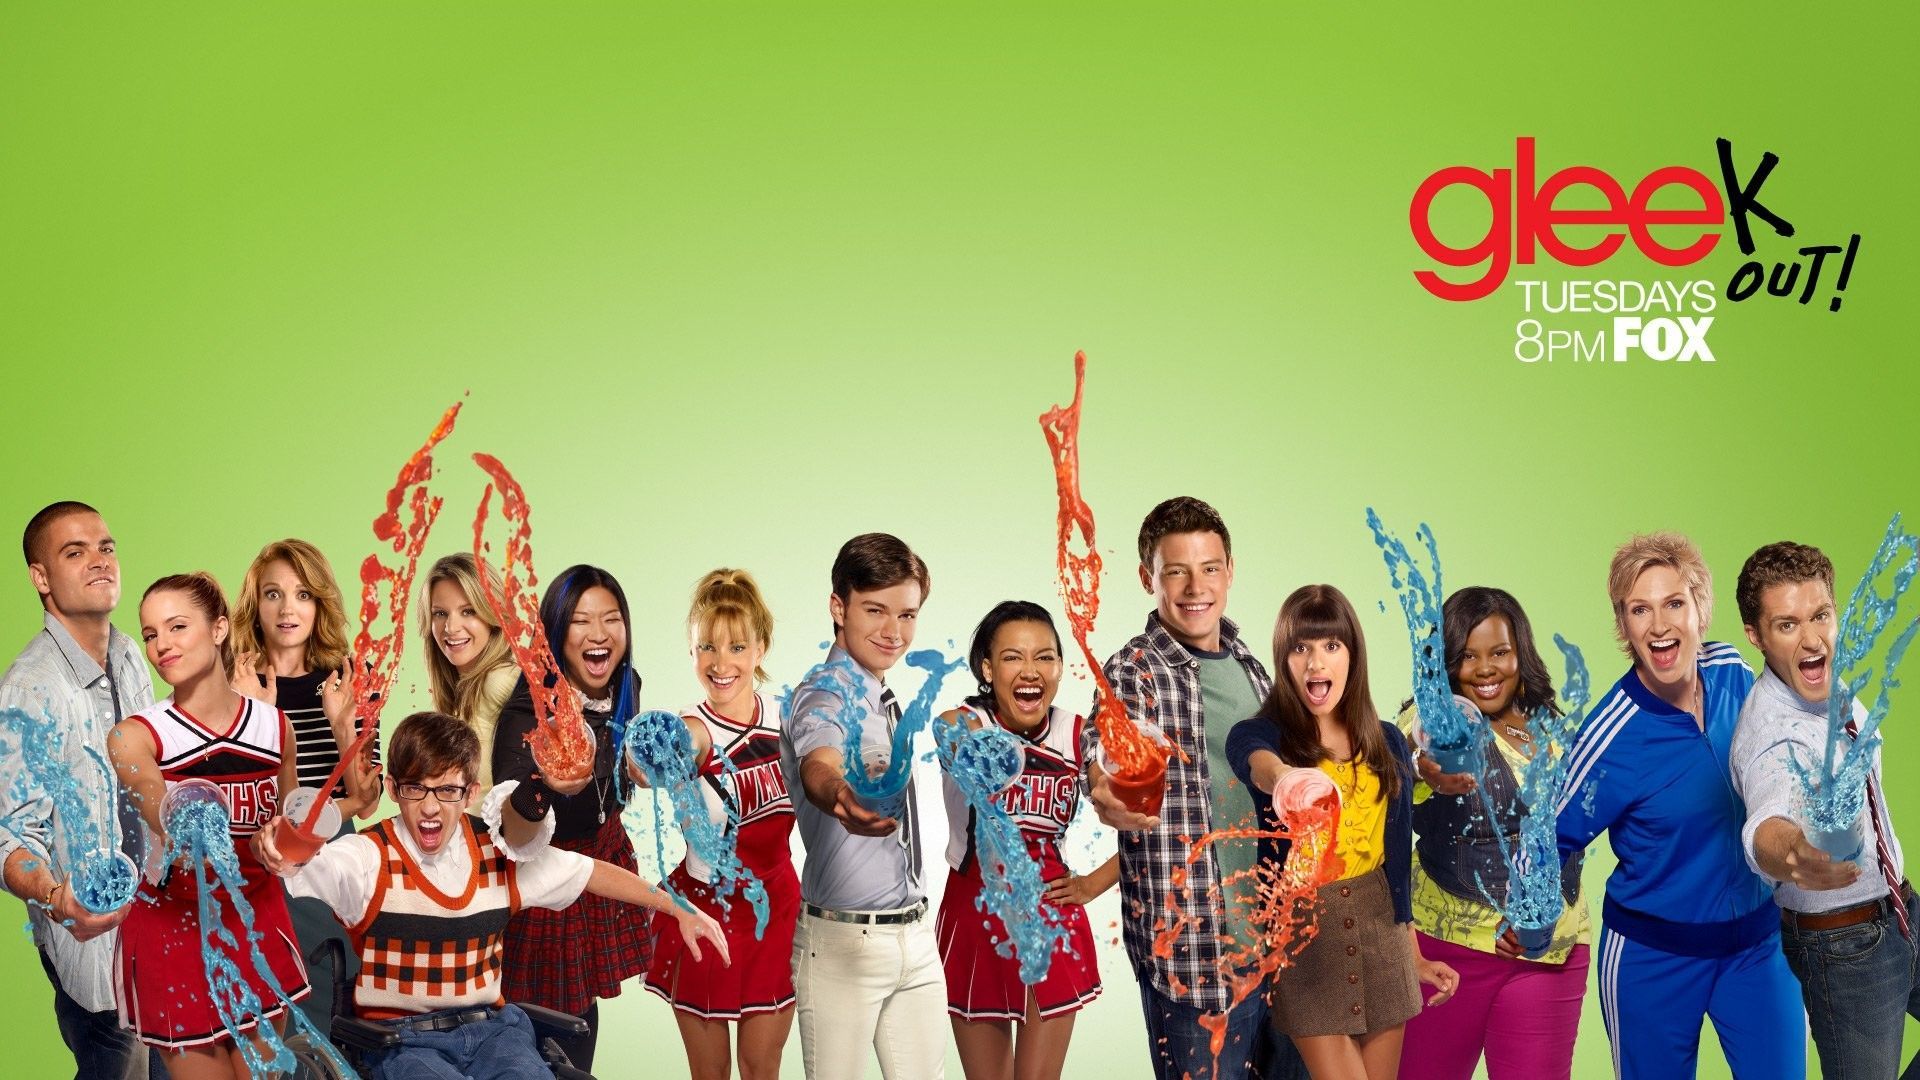 Glee Wallpaper Free Glee Background